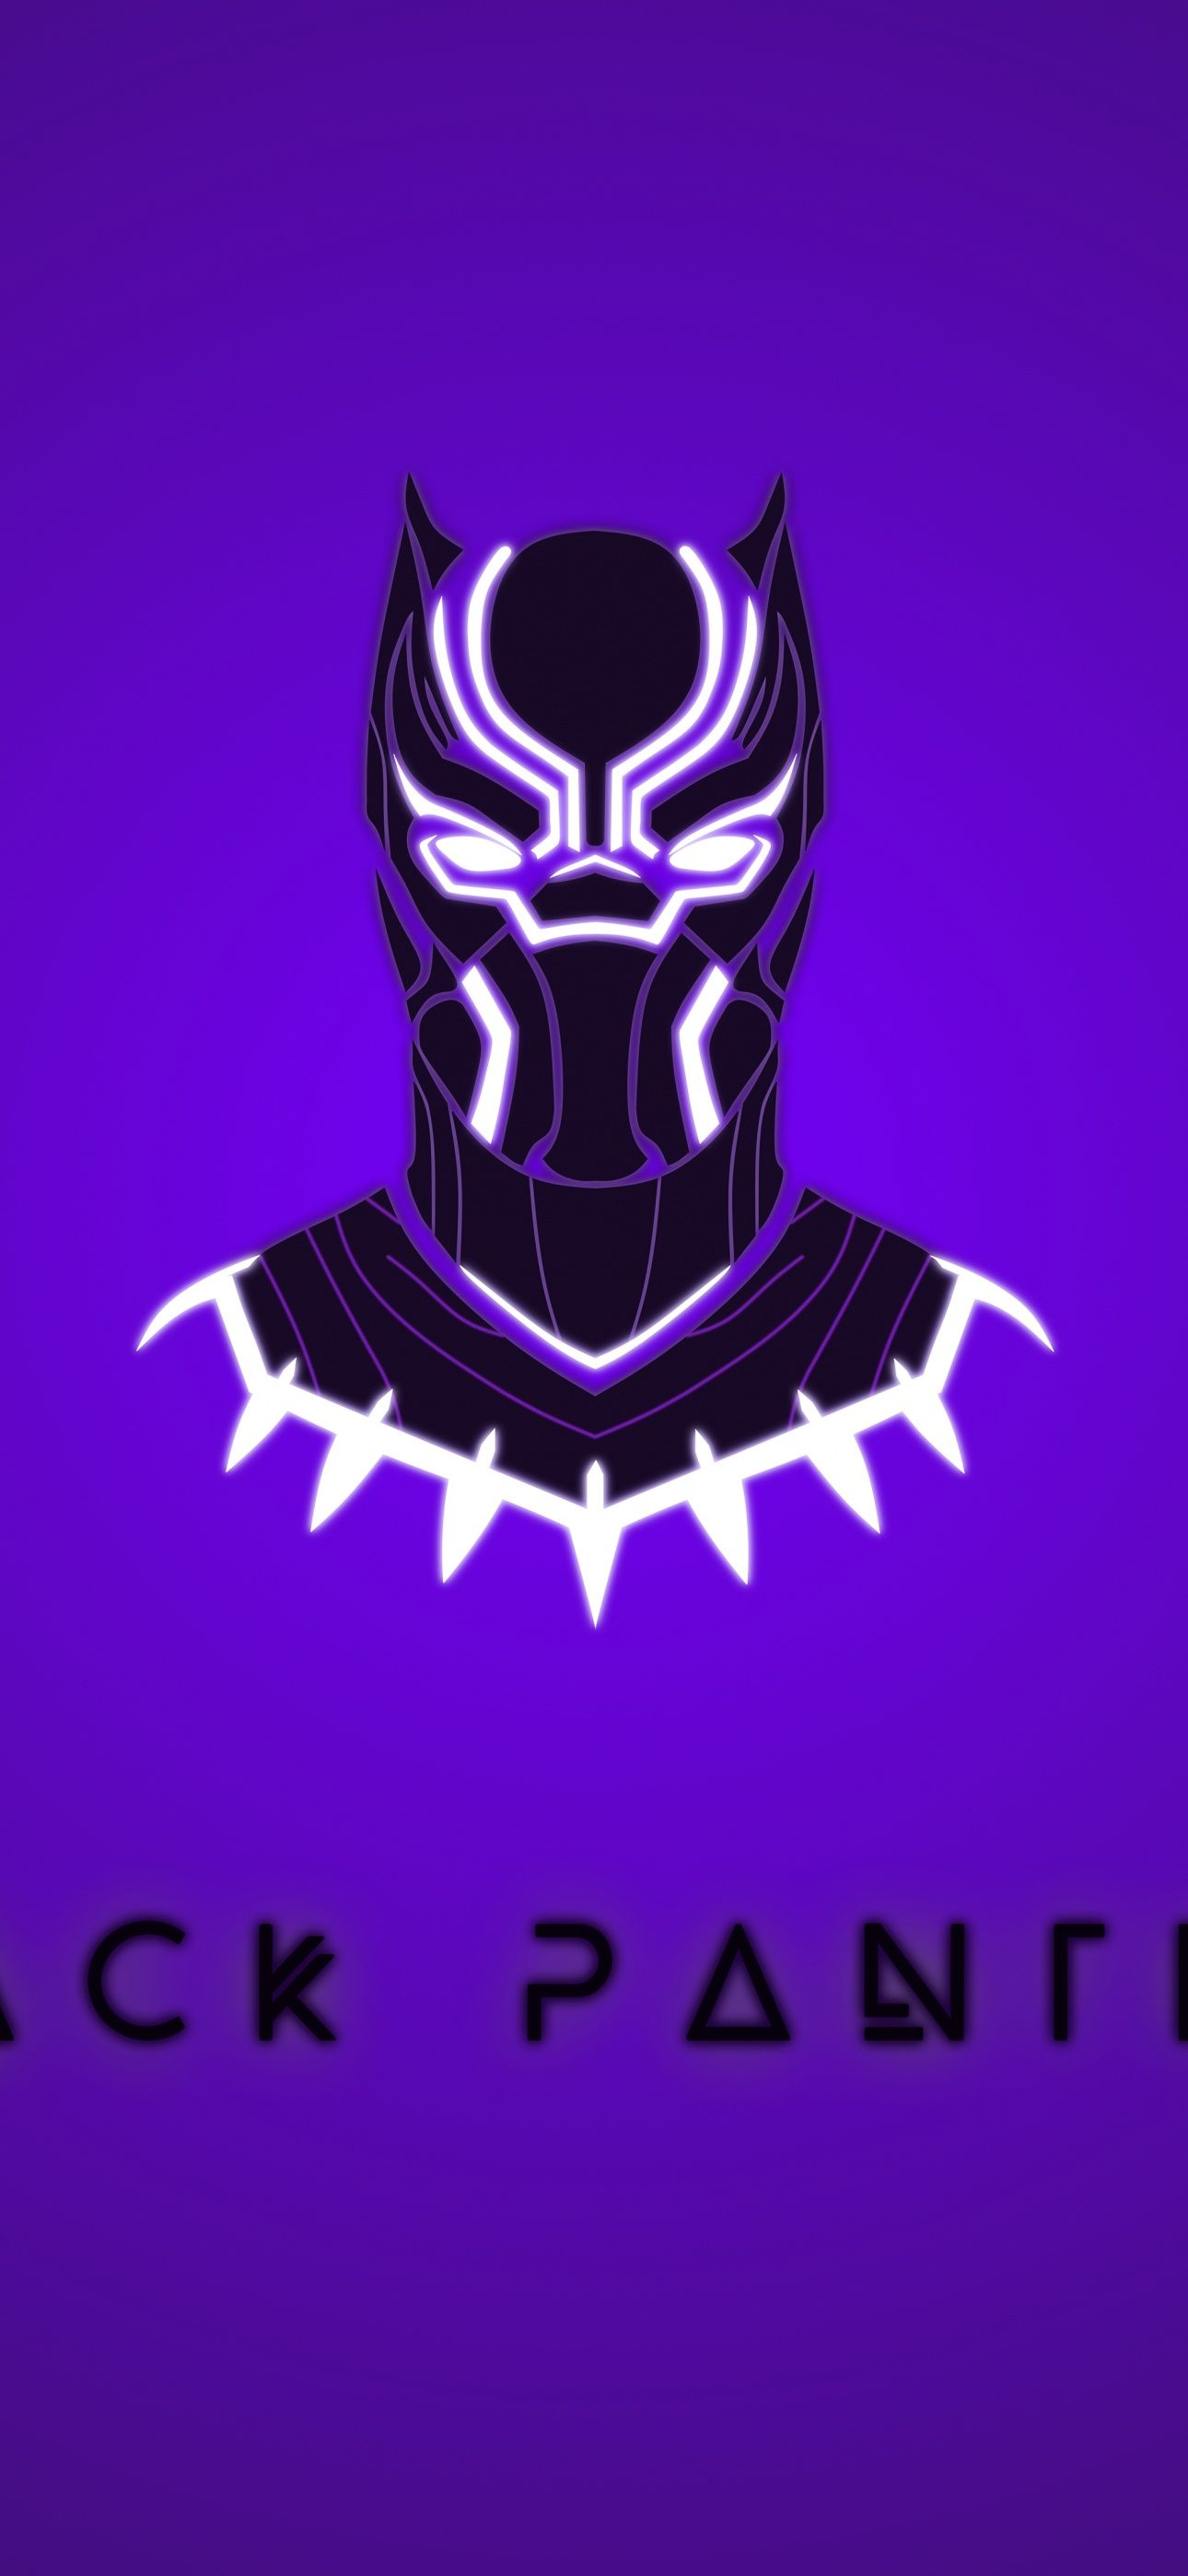 Black Panther 2018 4K Ultra HD Mobile Wallpaper or Background 001 - Marvel, Avengers